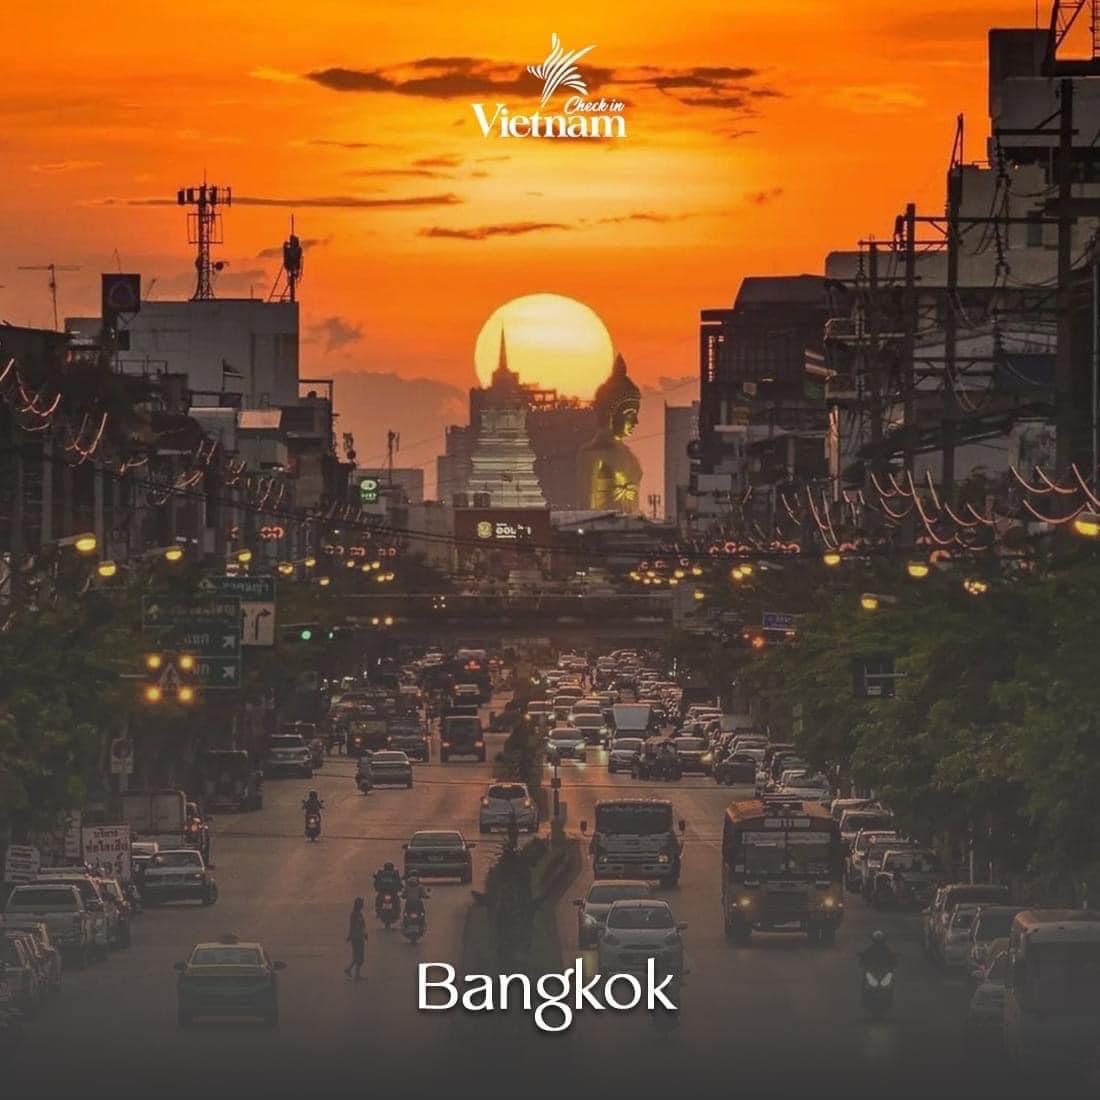 5. Bangkok